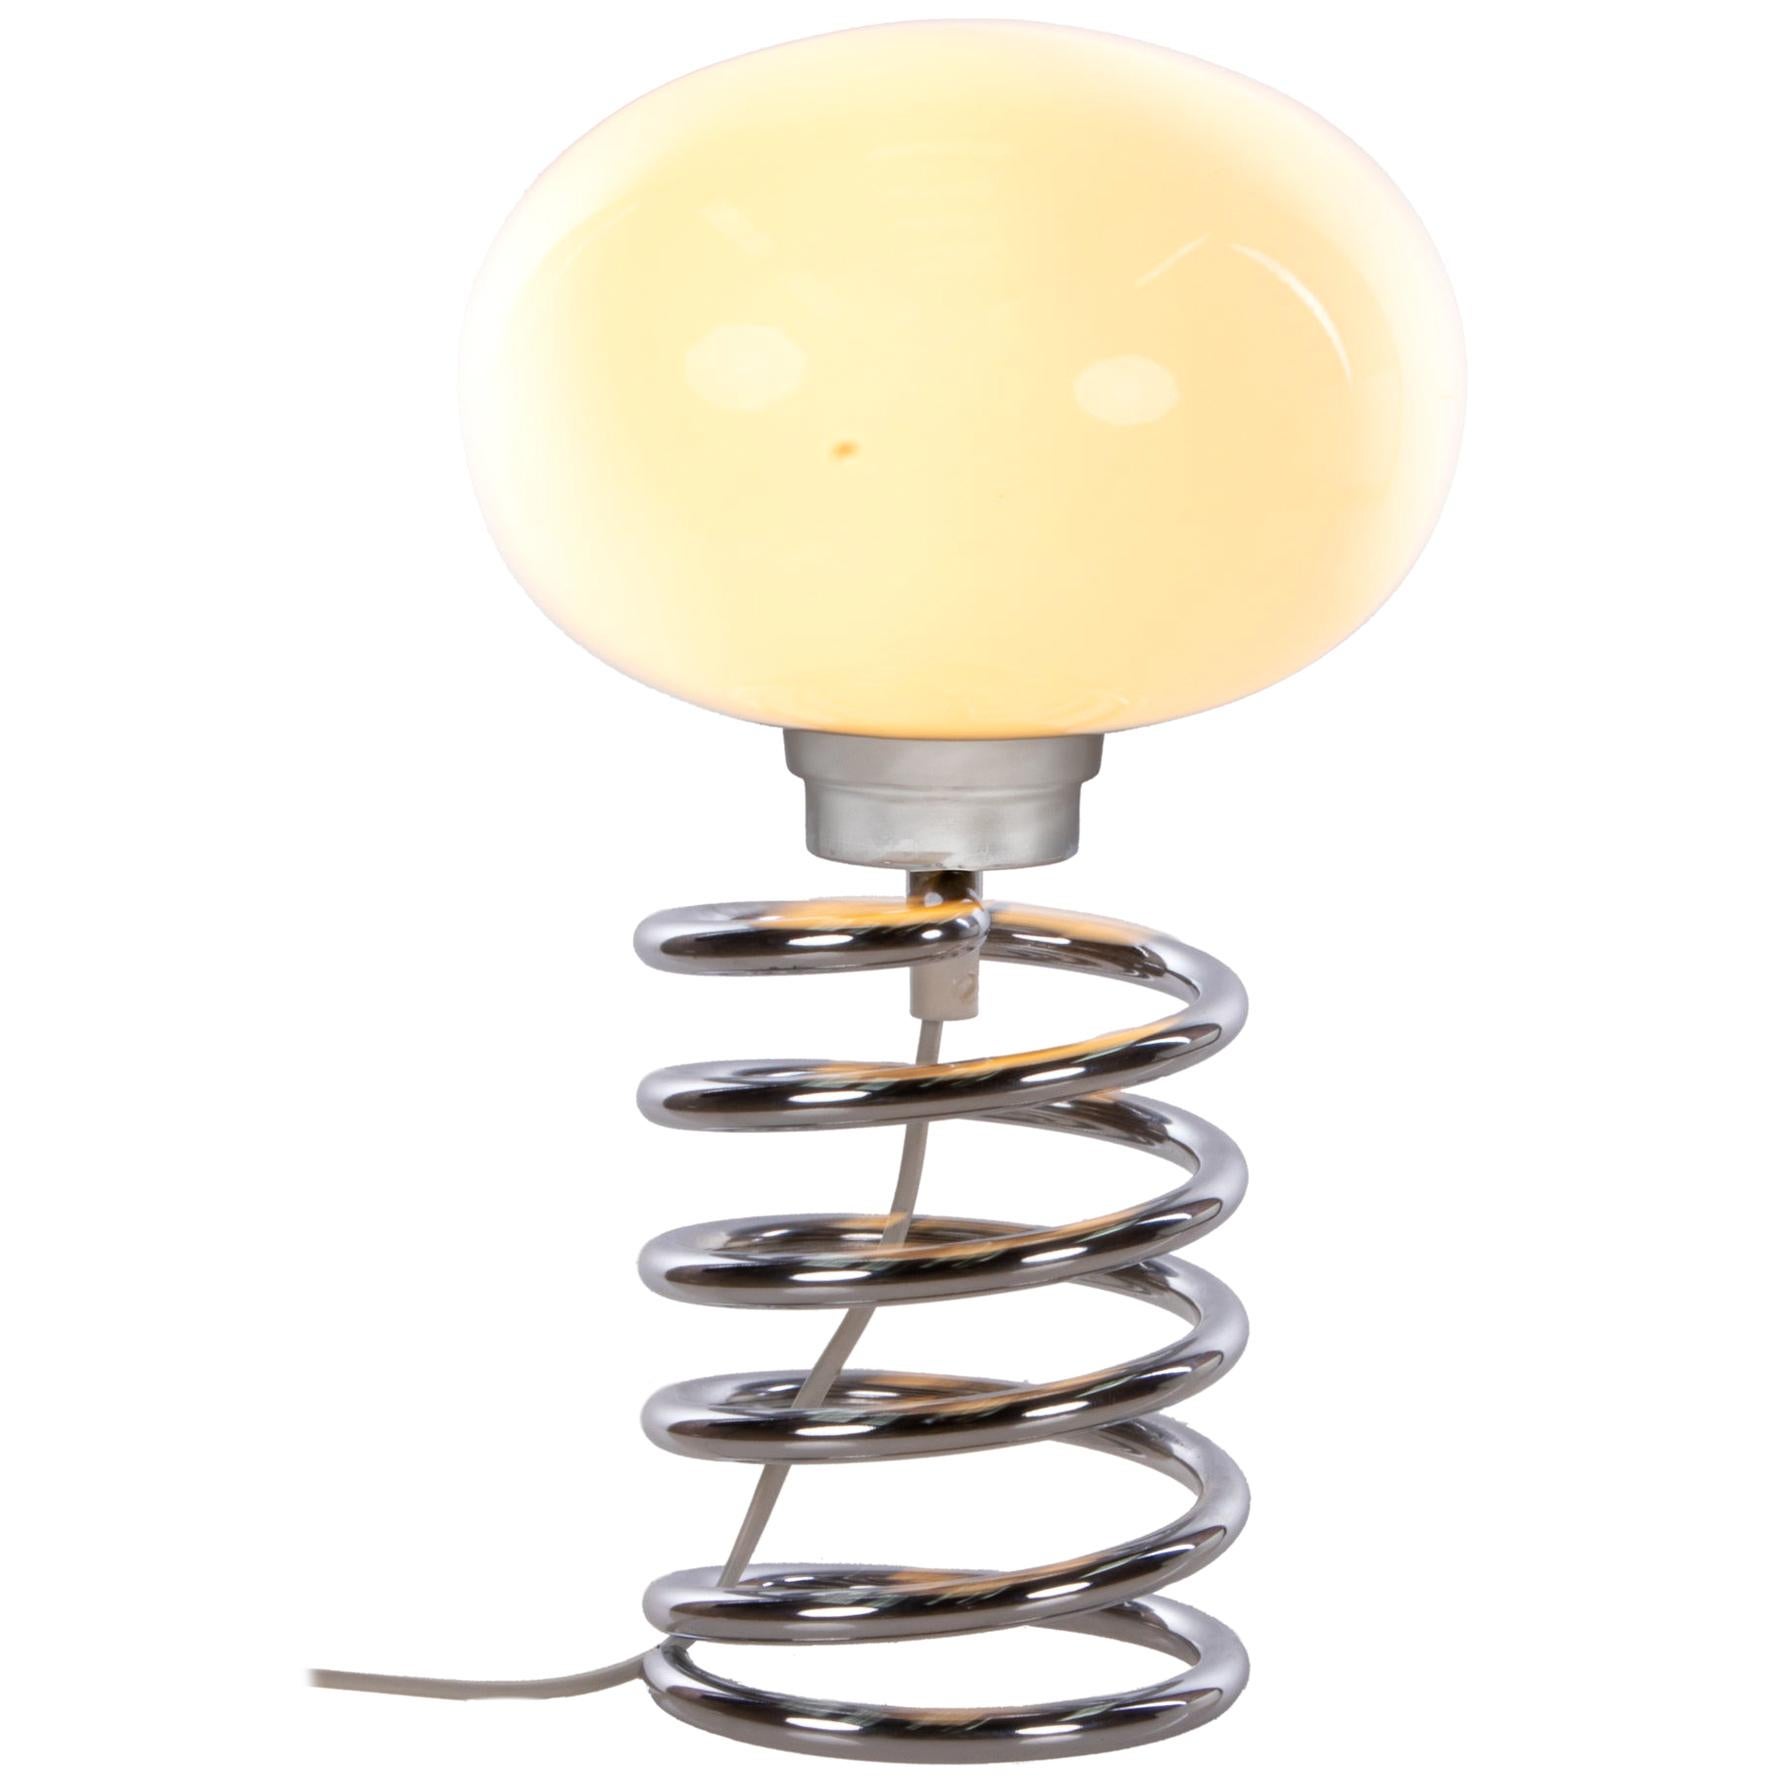 1965 Design M Ingo Maurer Petite lampe à poser 'Spirale' verre et chrome en vente